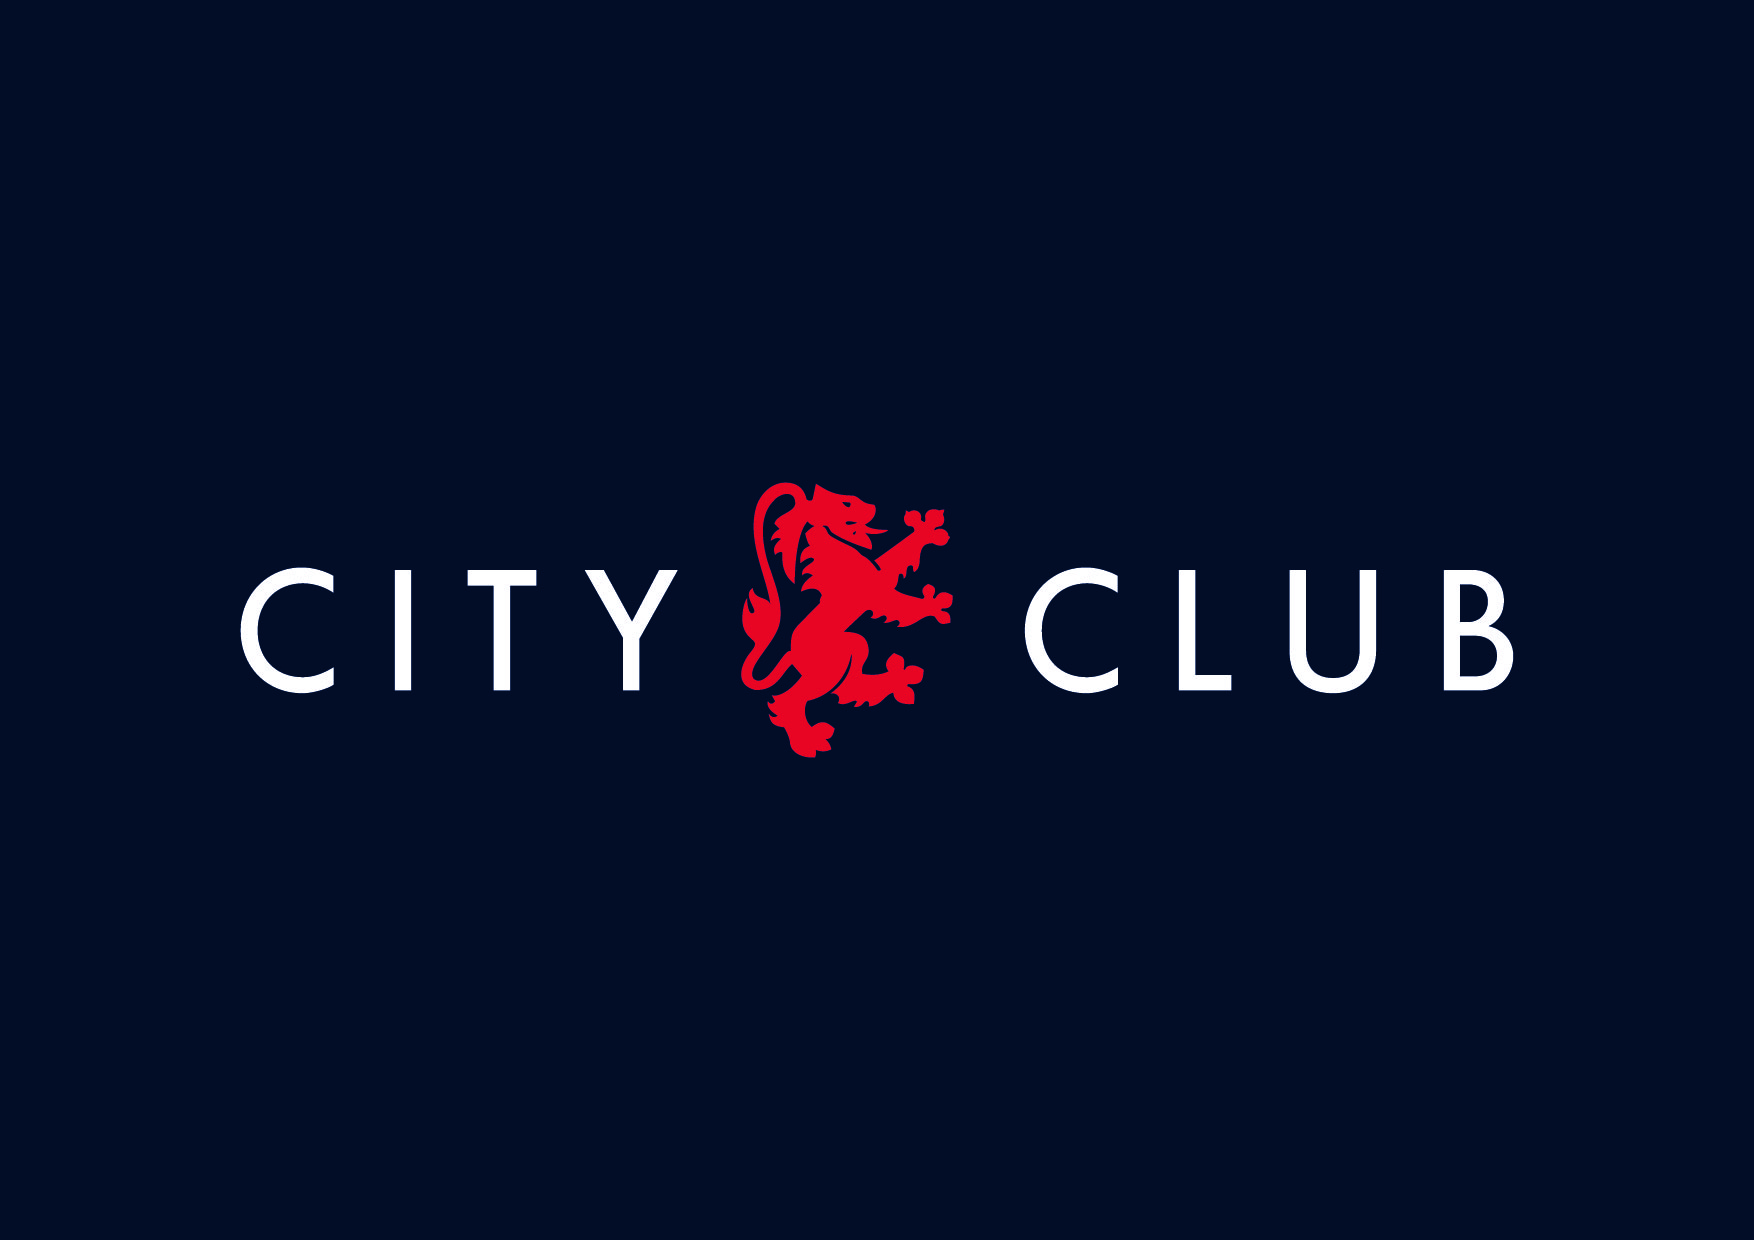 cityclub